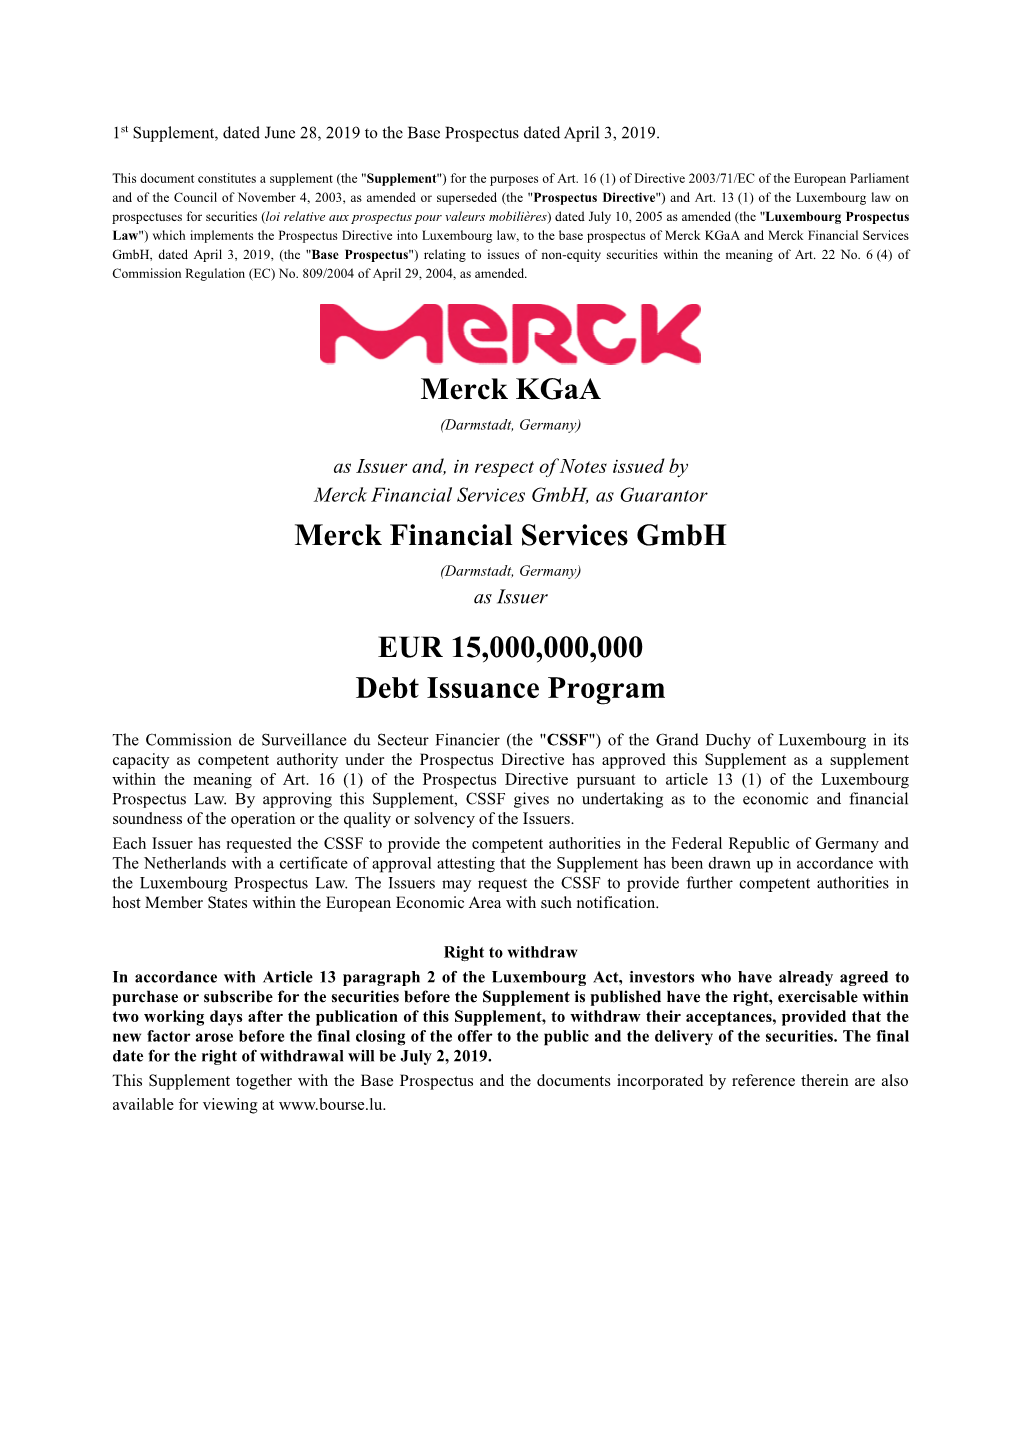 Merck Kgaa, Merck Financial Services Gmbh